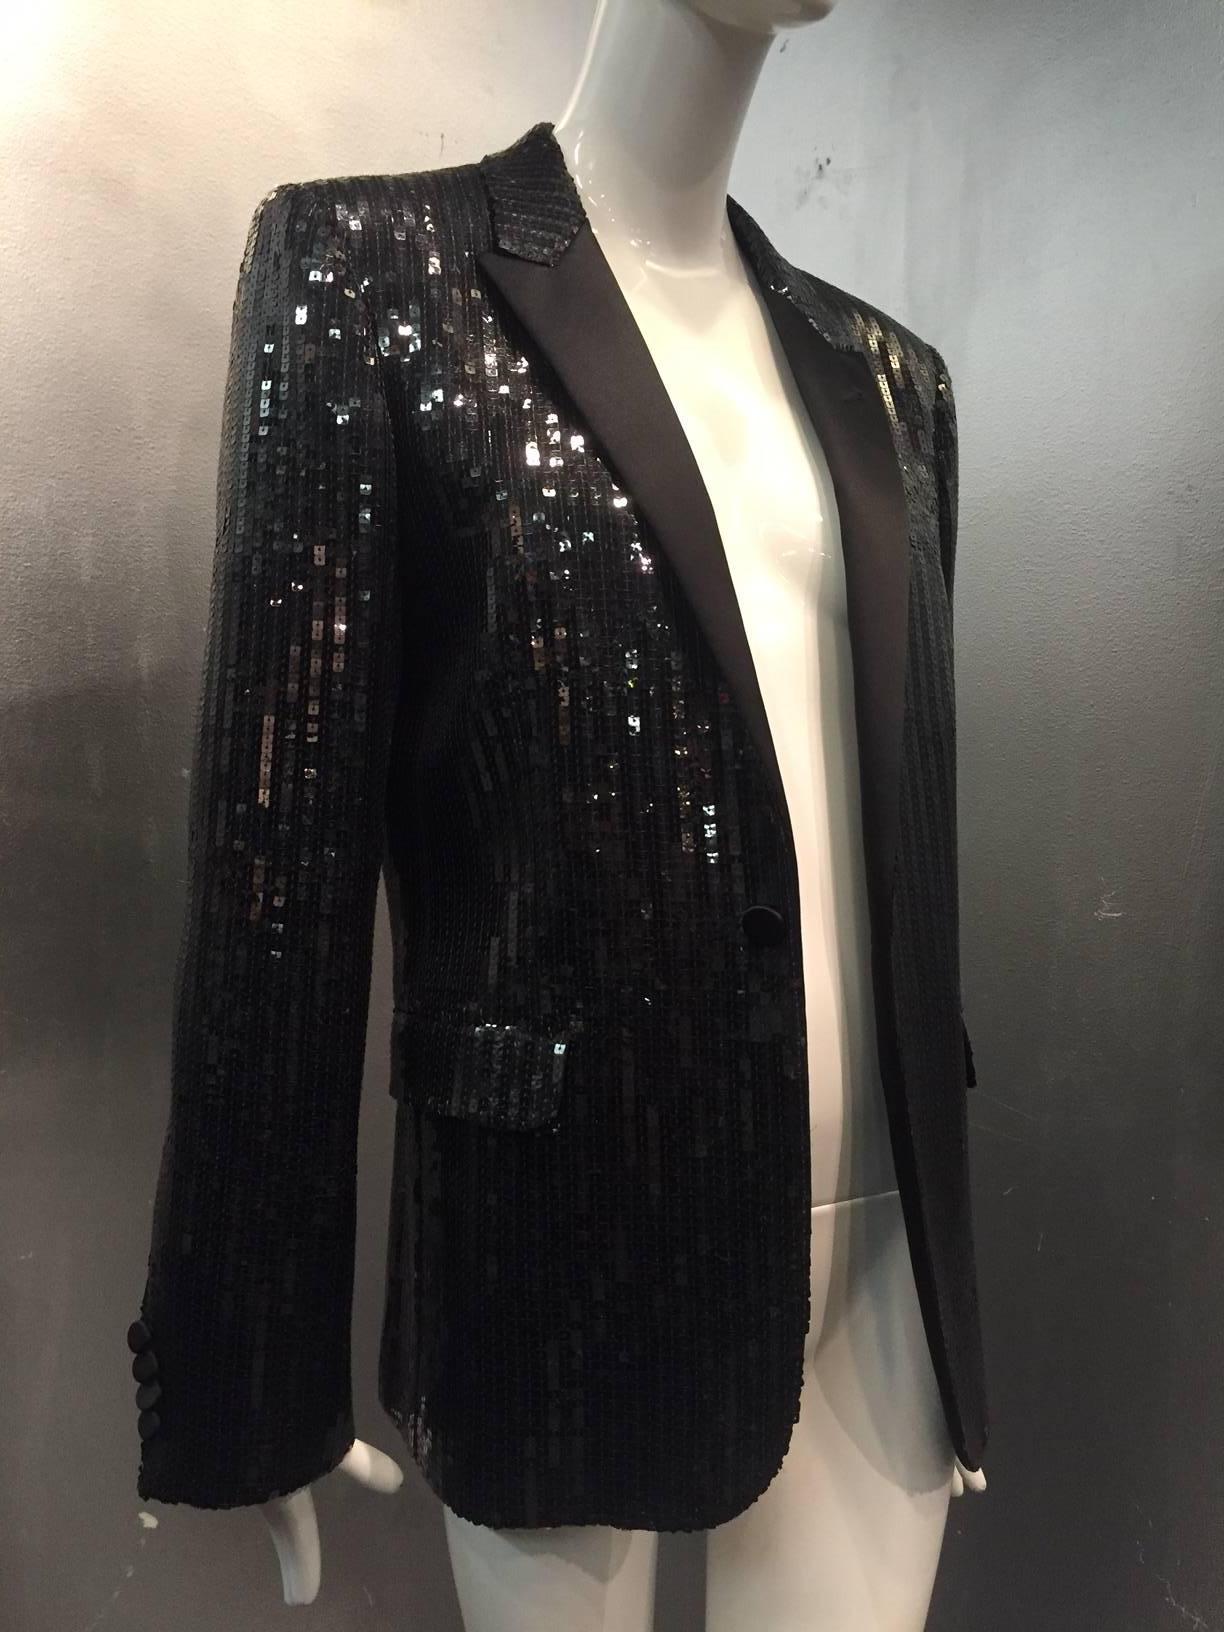 A fabulous Hedi Slimane for Saint Laurent menswear black sequin tuxedo jacket with satin lapels!  Single button style with flap pockets. 